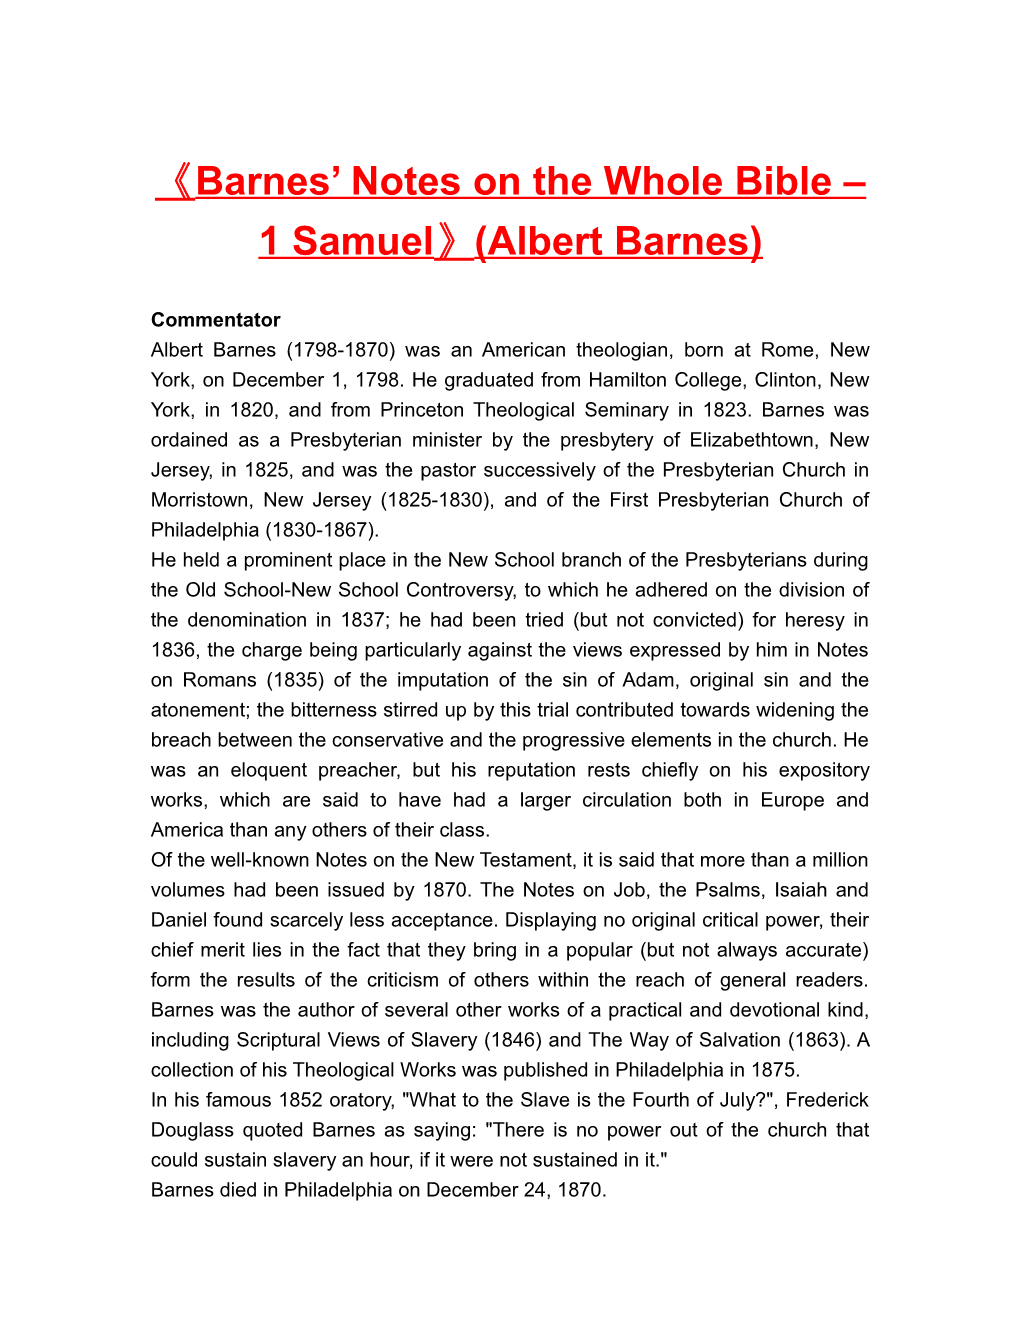 Barnes Notes on the Whole Bible 1 Samuel (Albert Barnes)